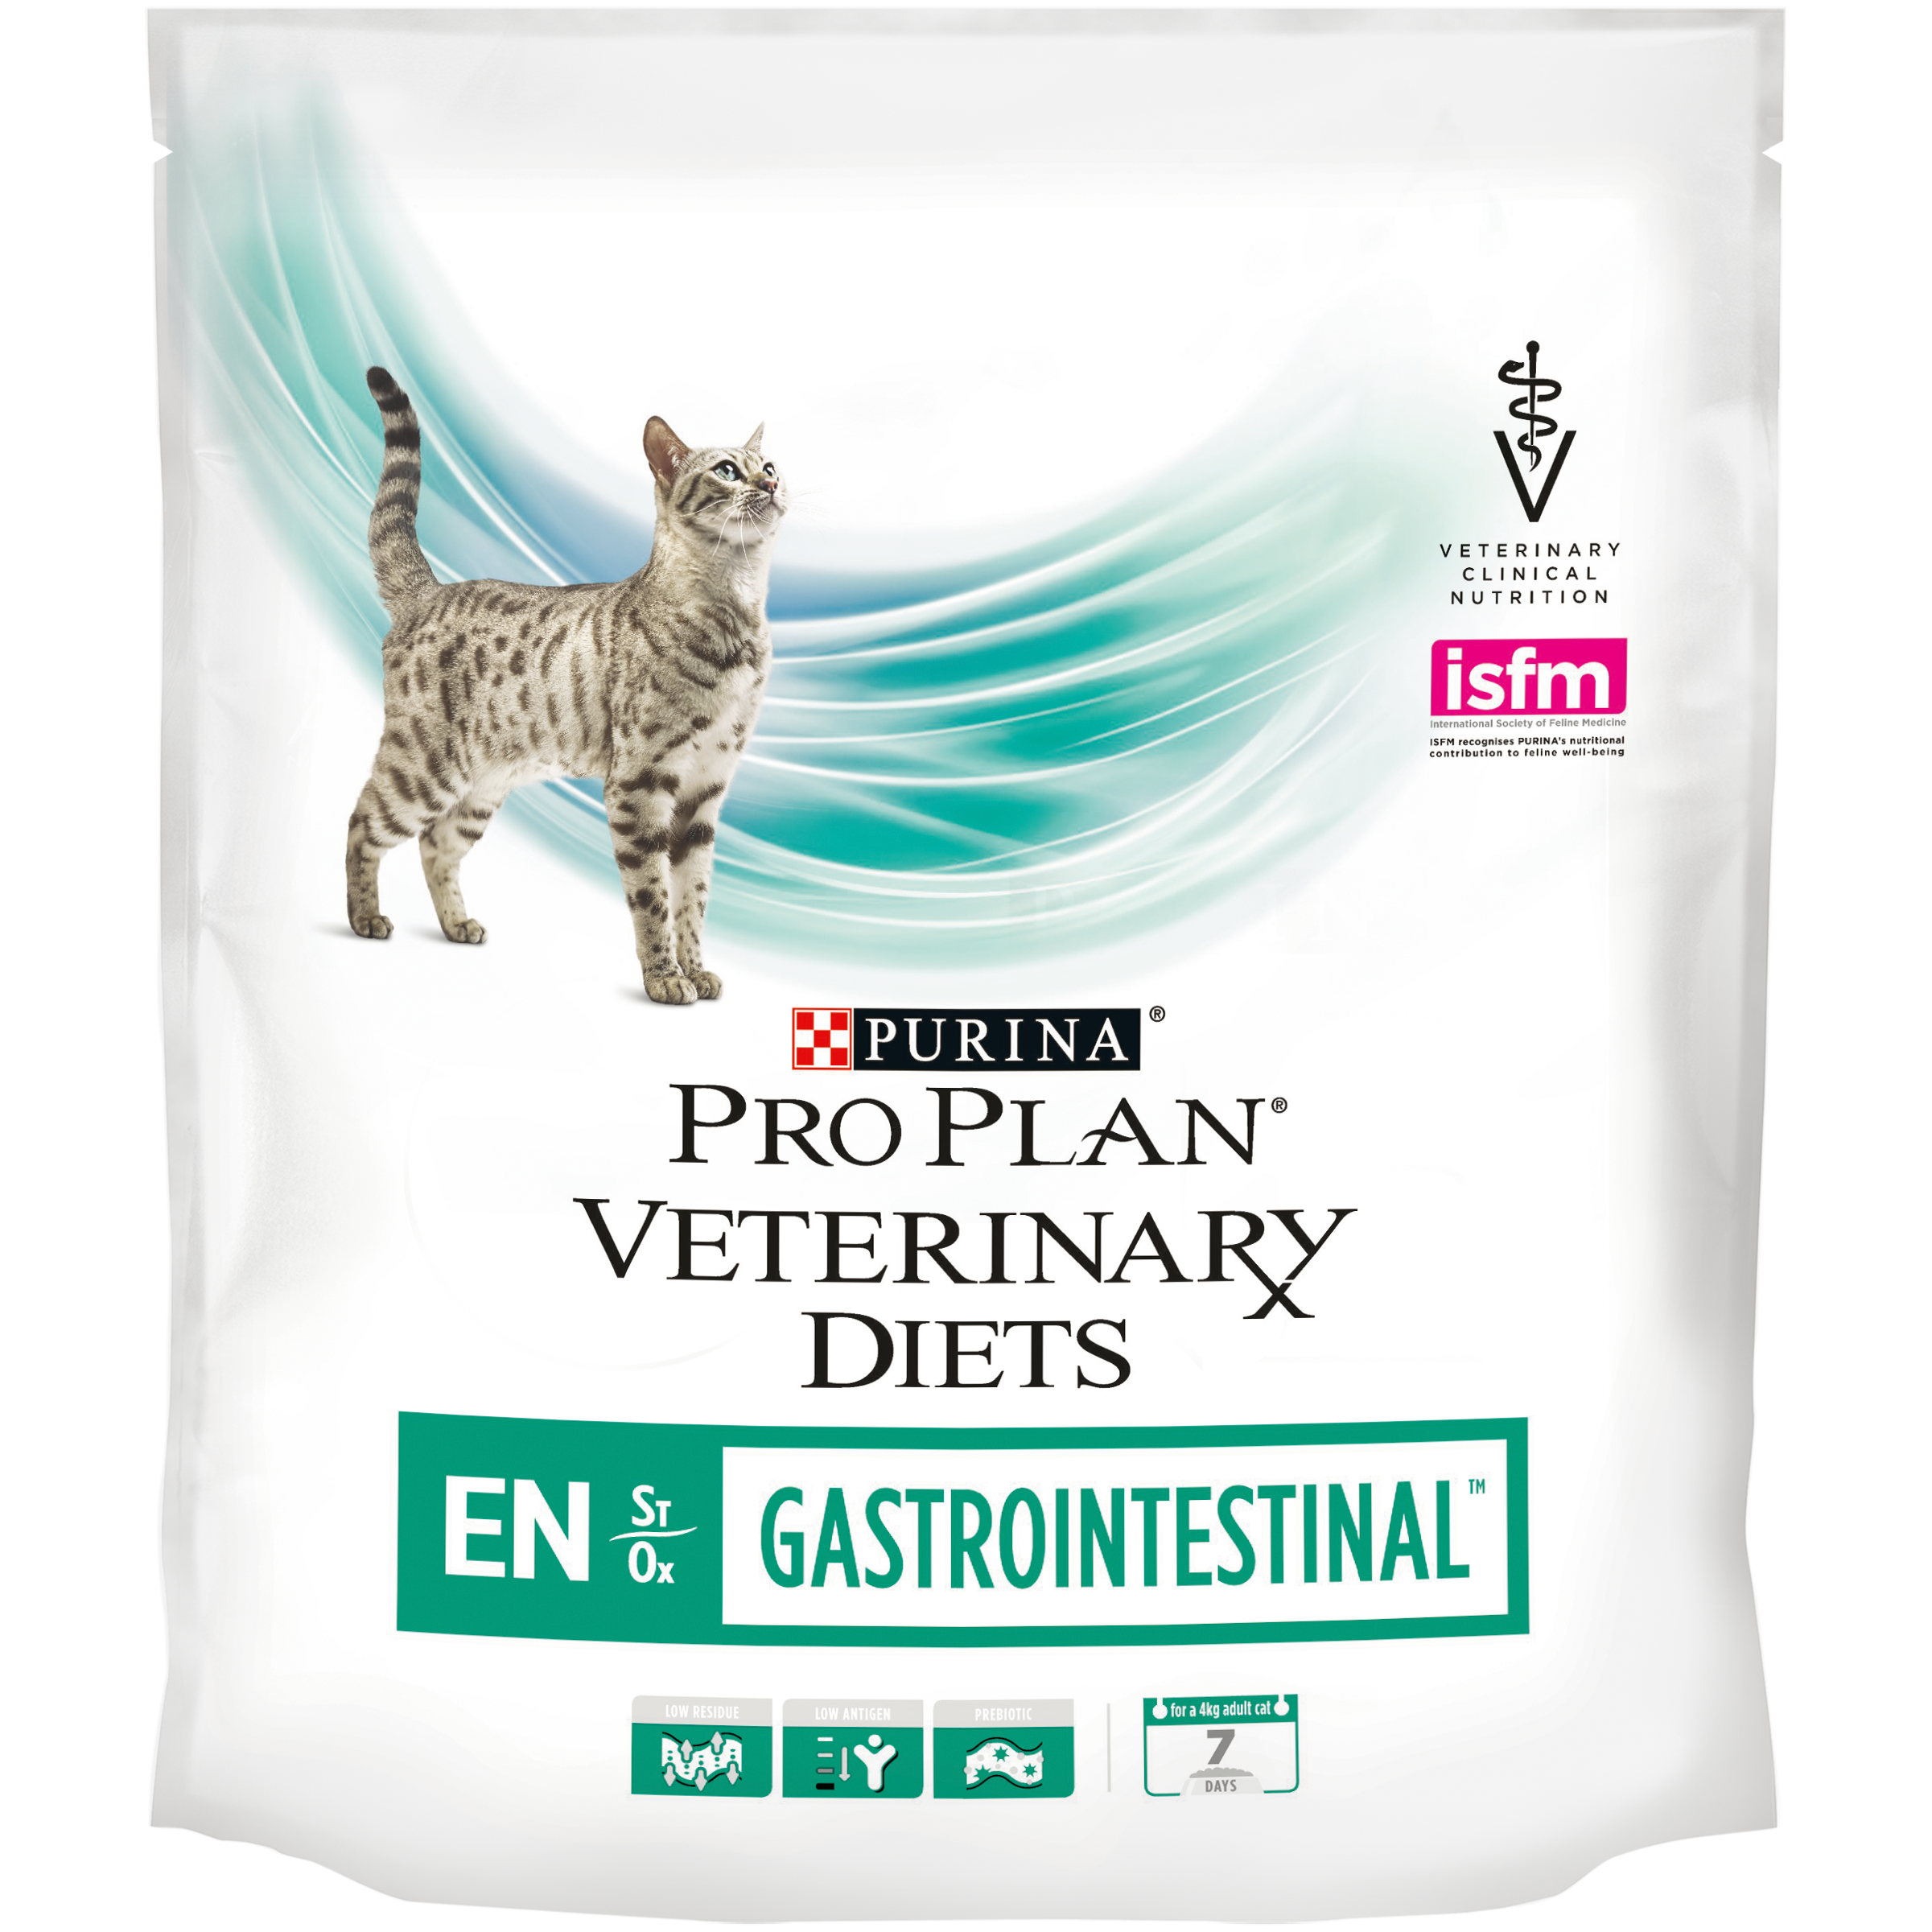 Pro Plan Veterinary Diets Hypoallergenic для кошек. Purina Pro Plan Veterinary Diets Gastrointestinal для кошек. Проплан Уринари для кошек сухой. Pro Plan Urinary для кошек. Purina pro plan ur